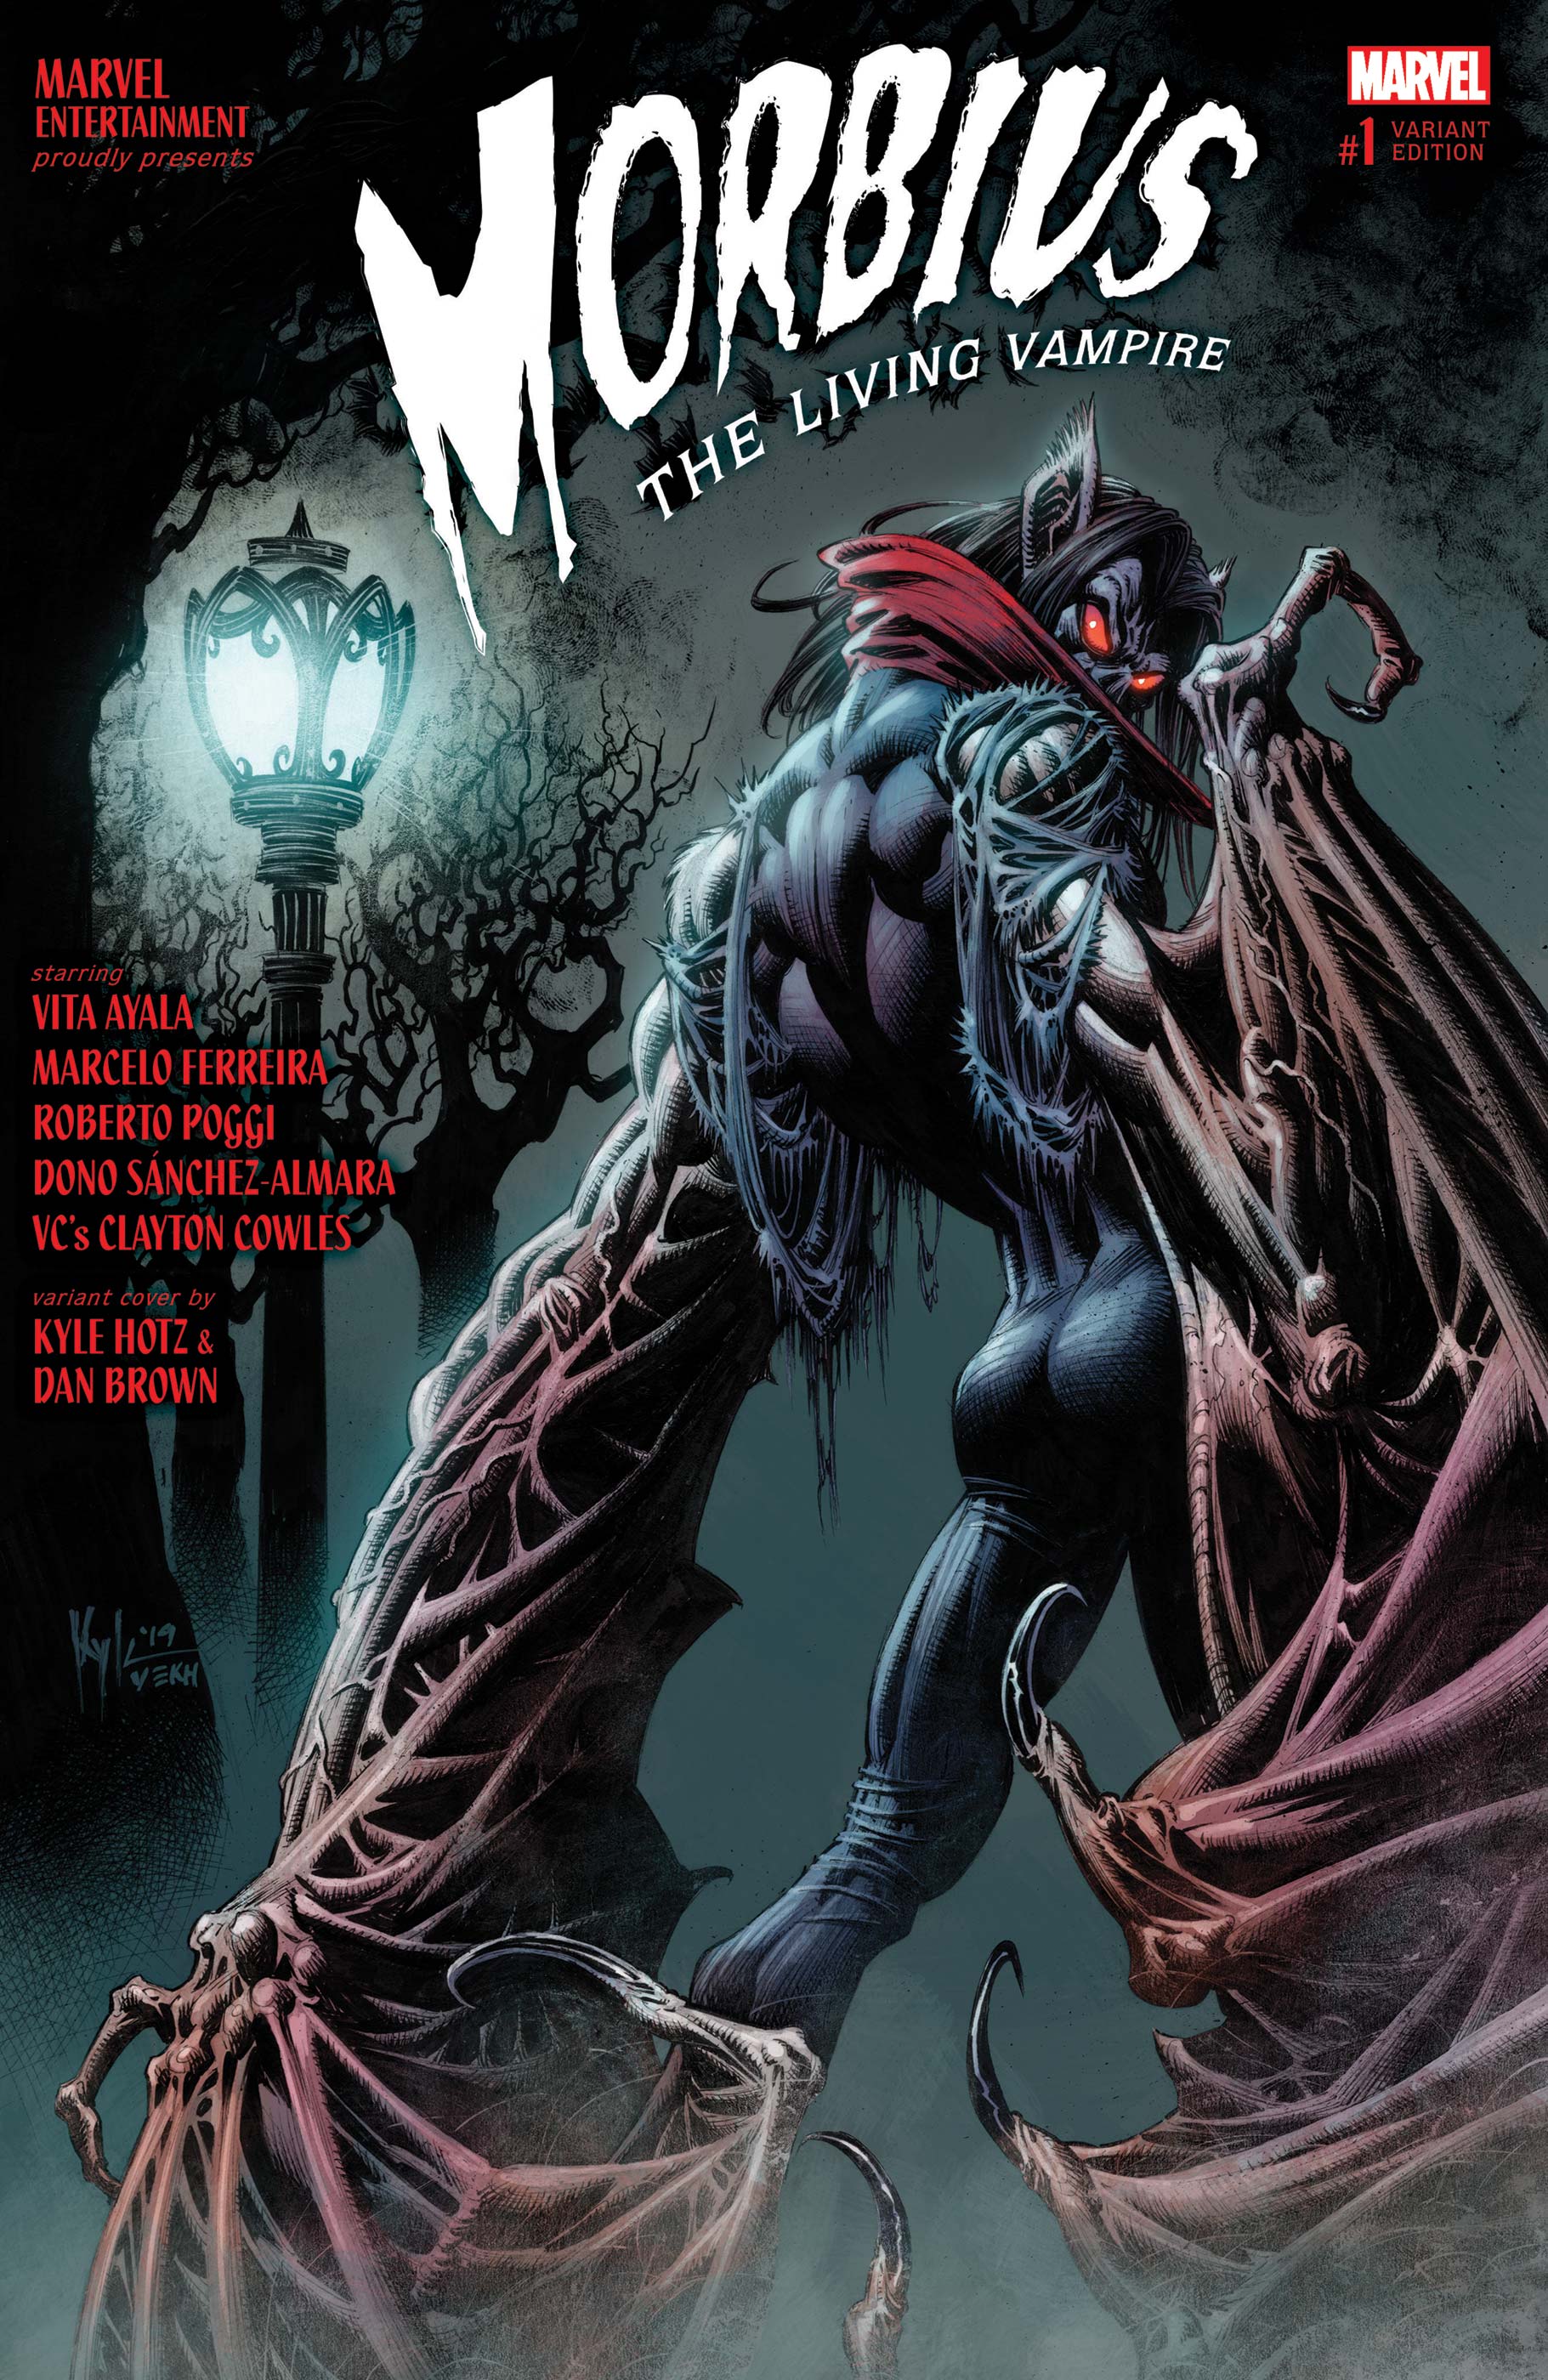 Morbius Variant Comic Issues Marvel